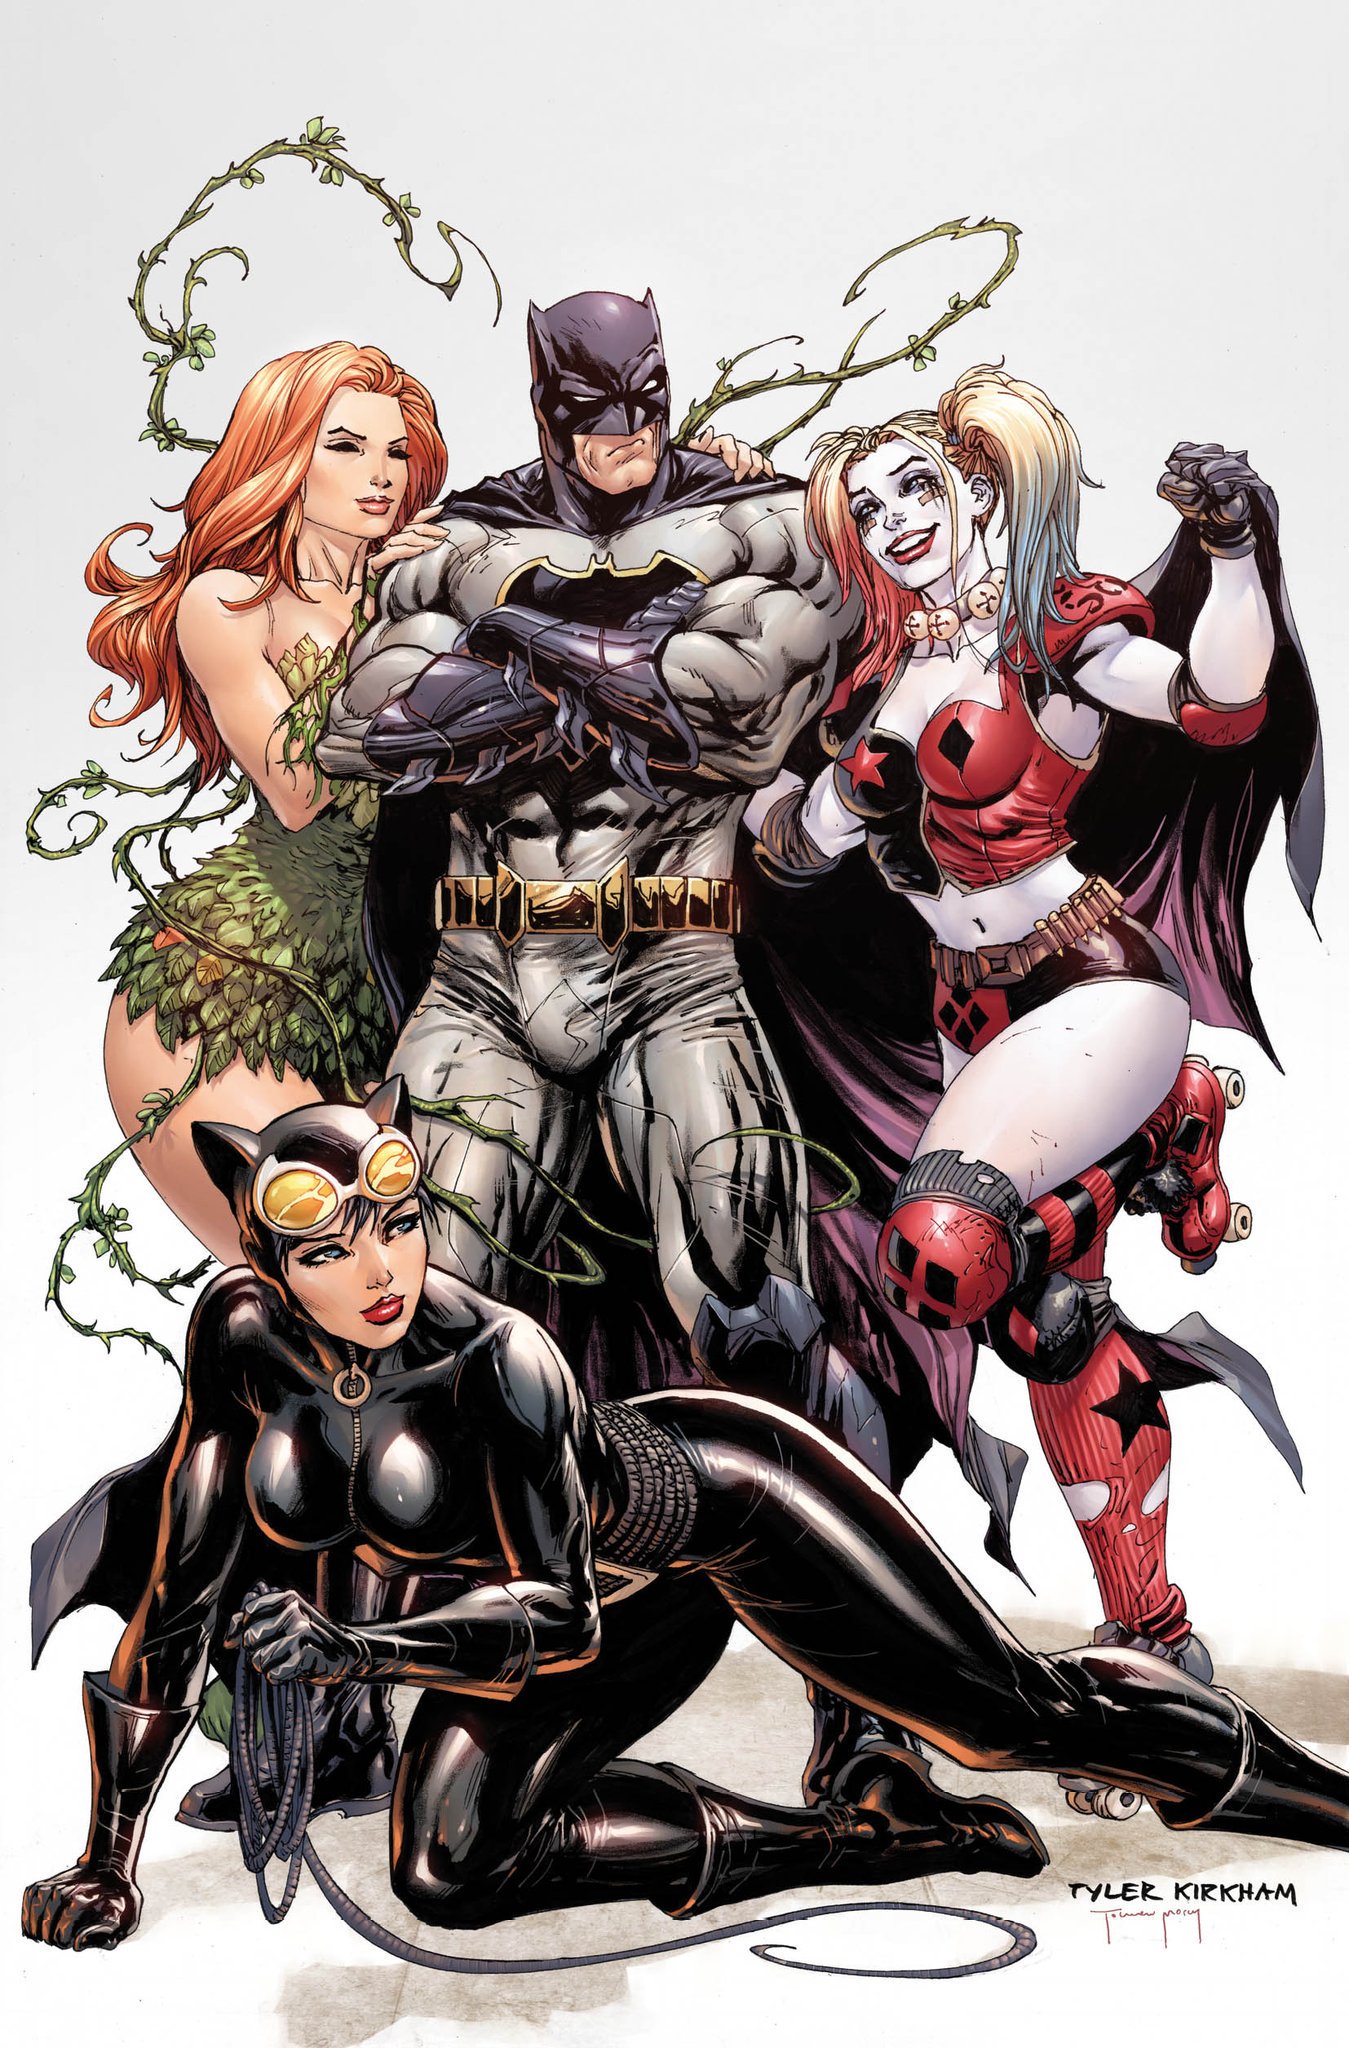 Batman: Rebirth Vol 1 1 | DC Database | Fandom